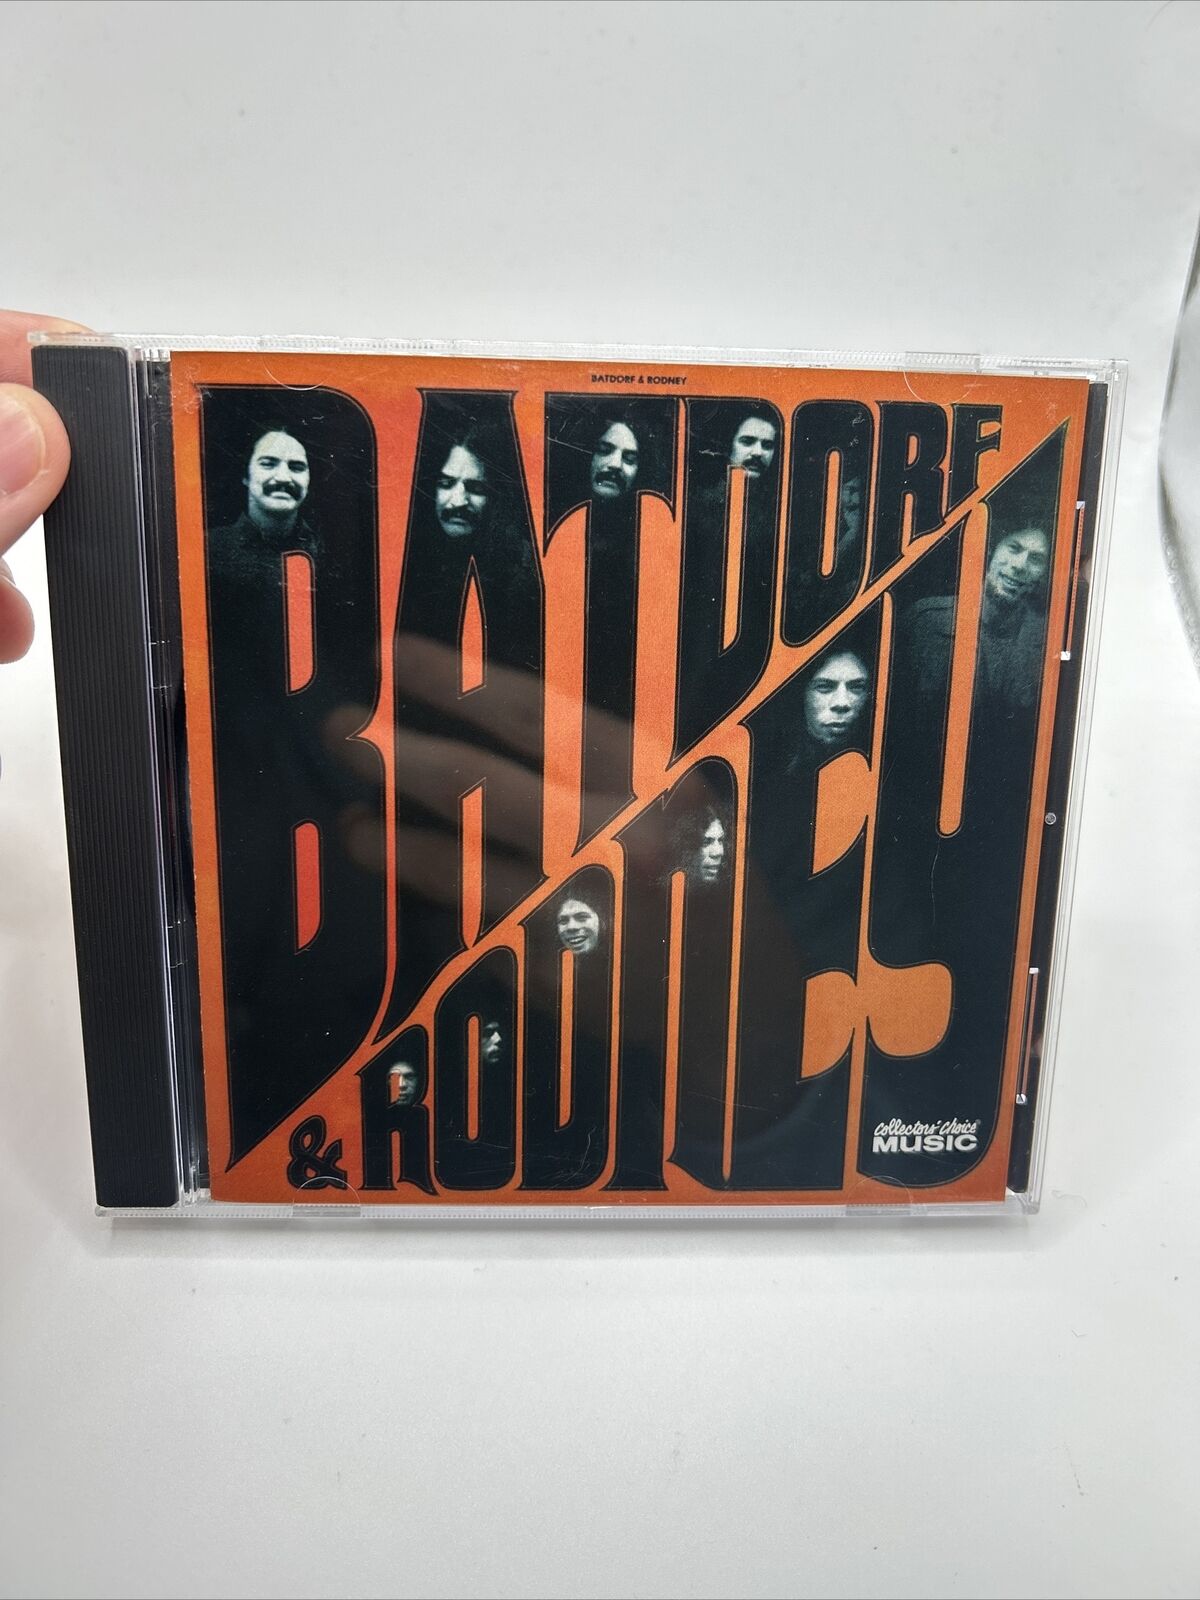 Batdorf & Rodney - Collector’s Choice Music - 9 Tracks [CD, 2005]